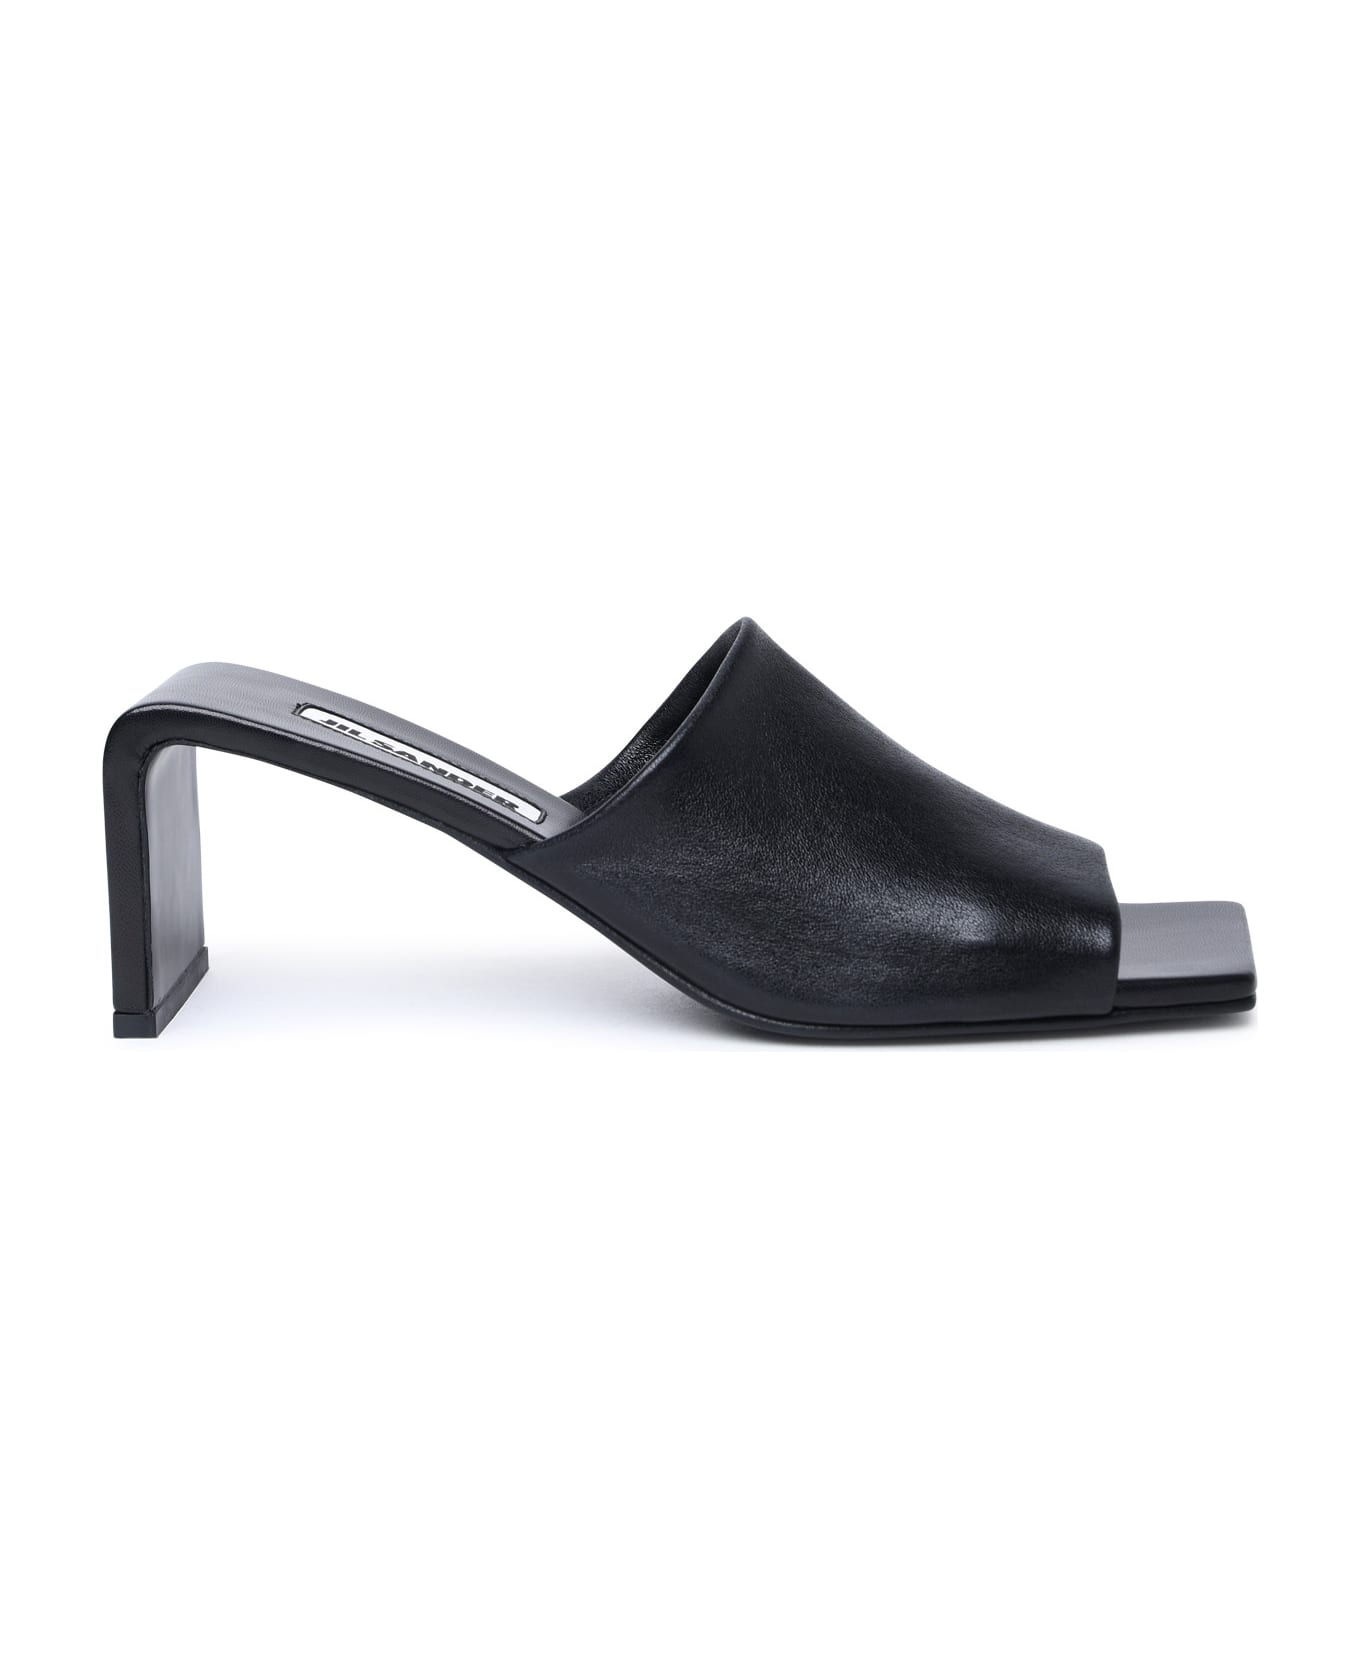 Jil Sander Black Leather Sandals - Black サンダル